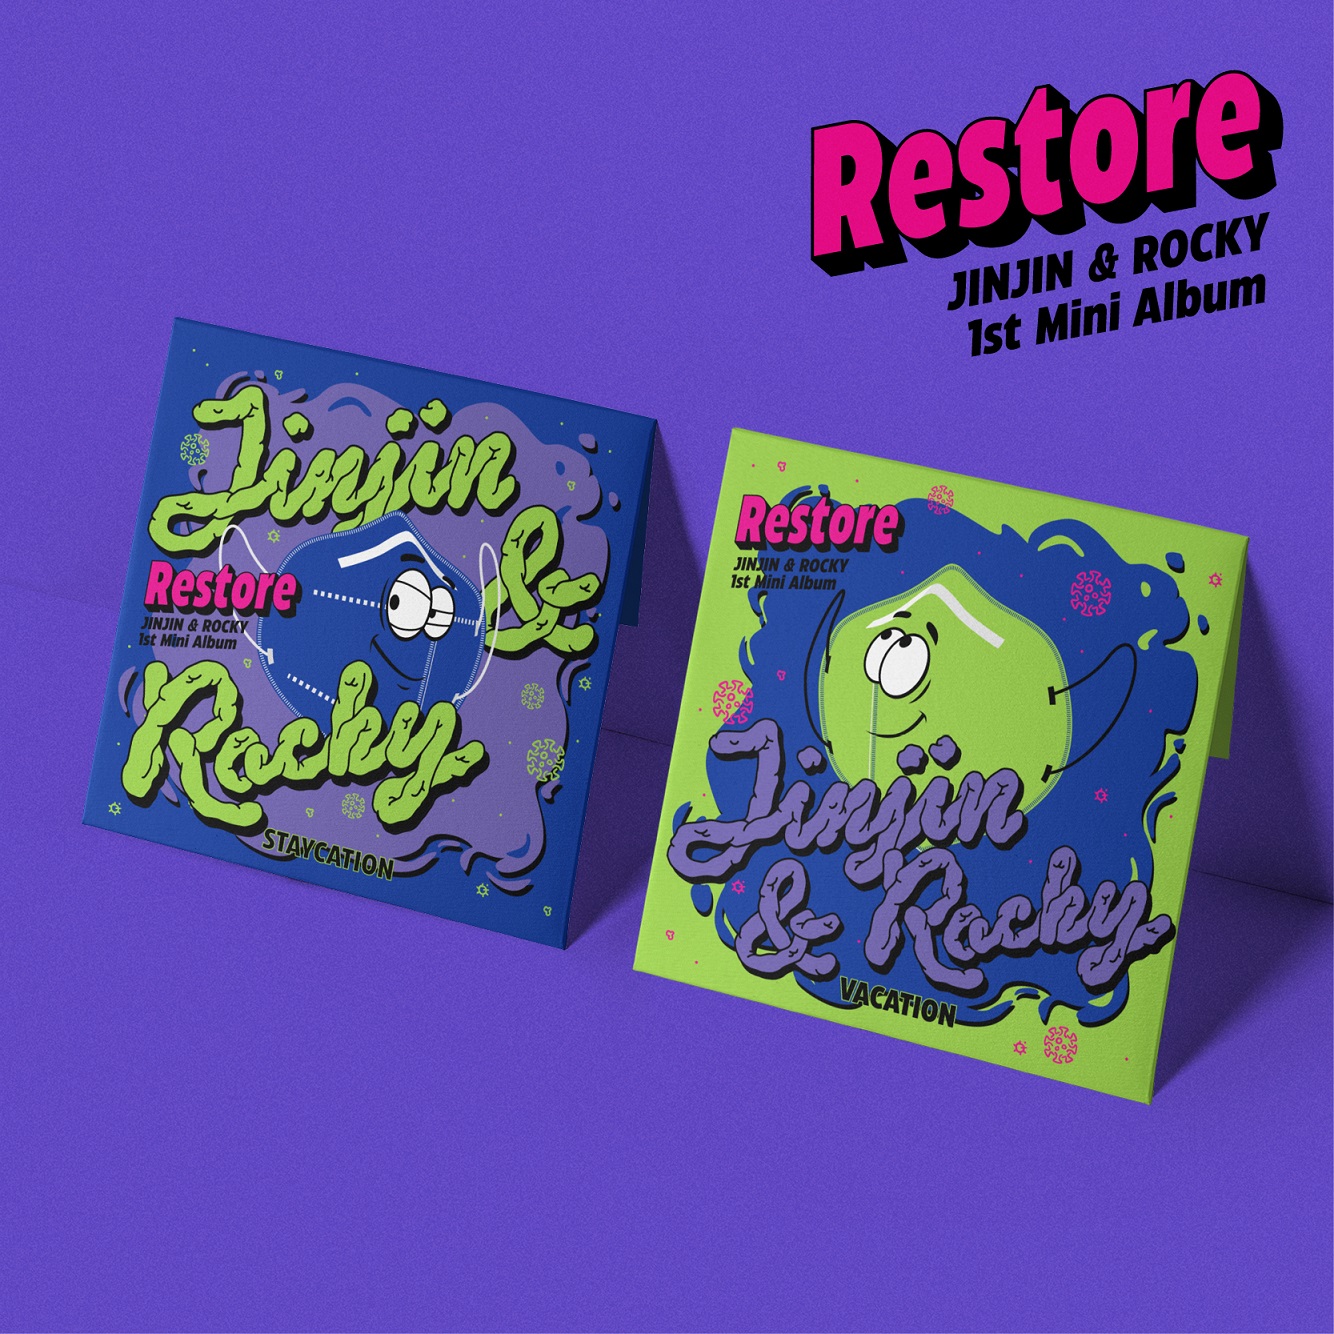 [ASTRO ALBUM][2CD SET] JINJIN&ROCKY - Mini Album Vol.1 [Restore] (STAYCATION Ver. + VACATION Ver.)